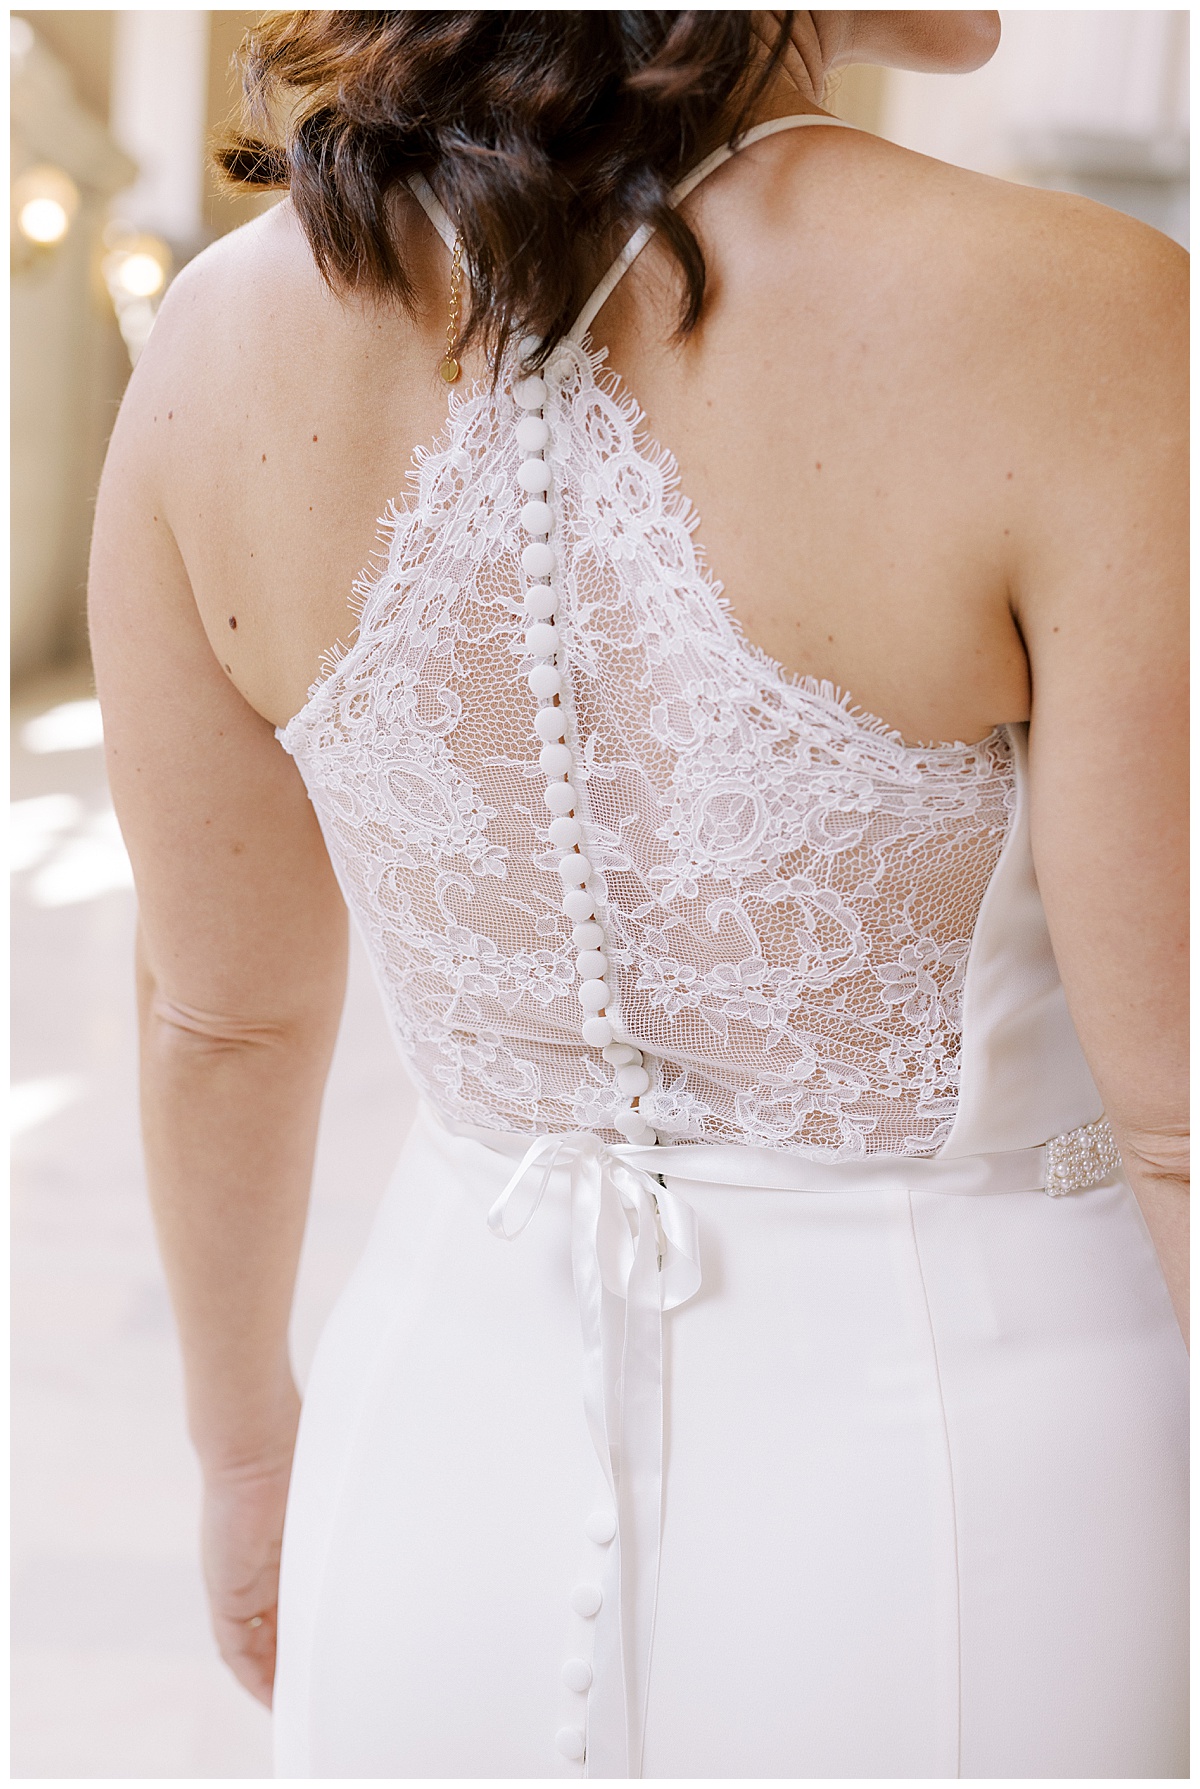 Detail shot of Hillary's lace wedding dress back